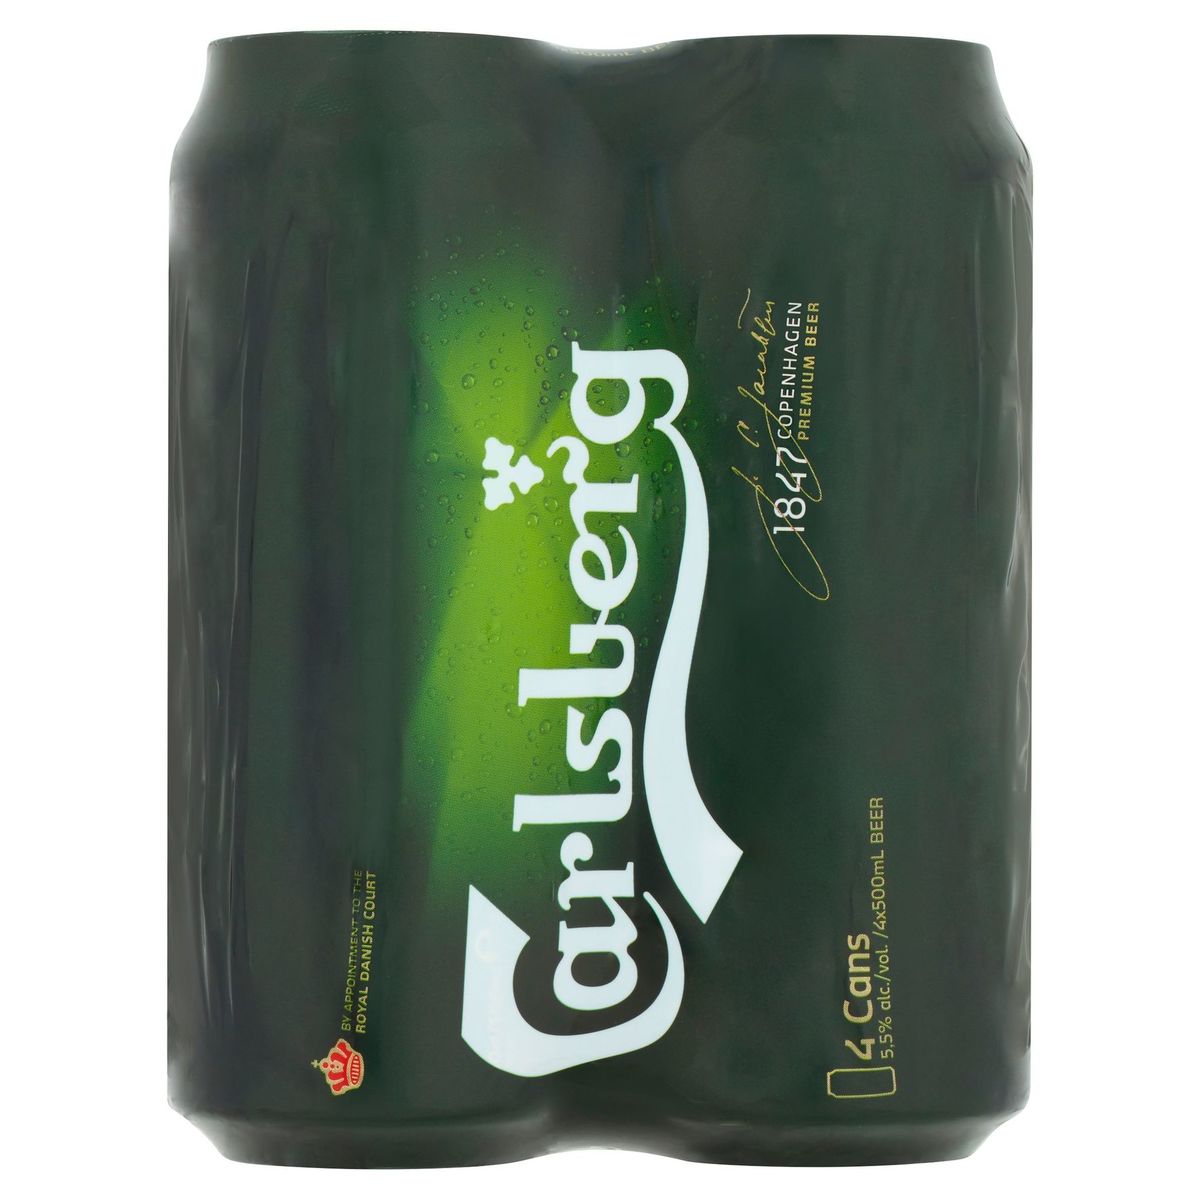 Carlsberg 1847 Copenhagen Premium Beer Canettes 4 x 500 ml